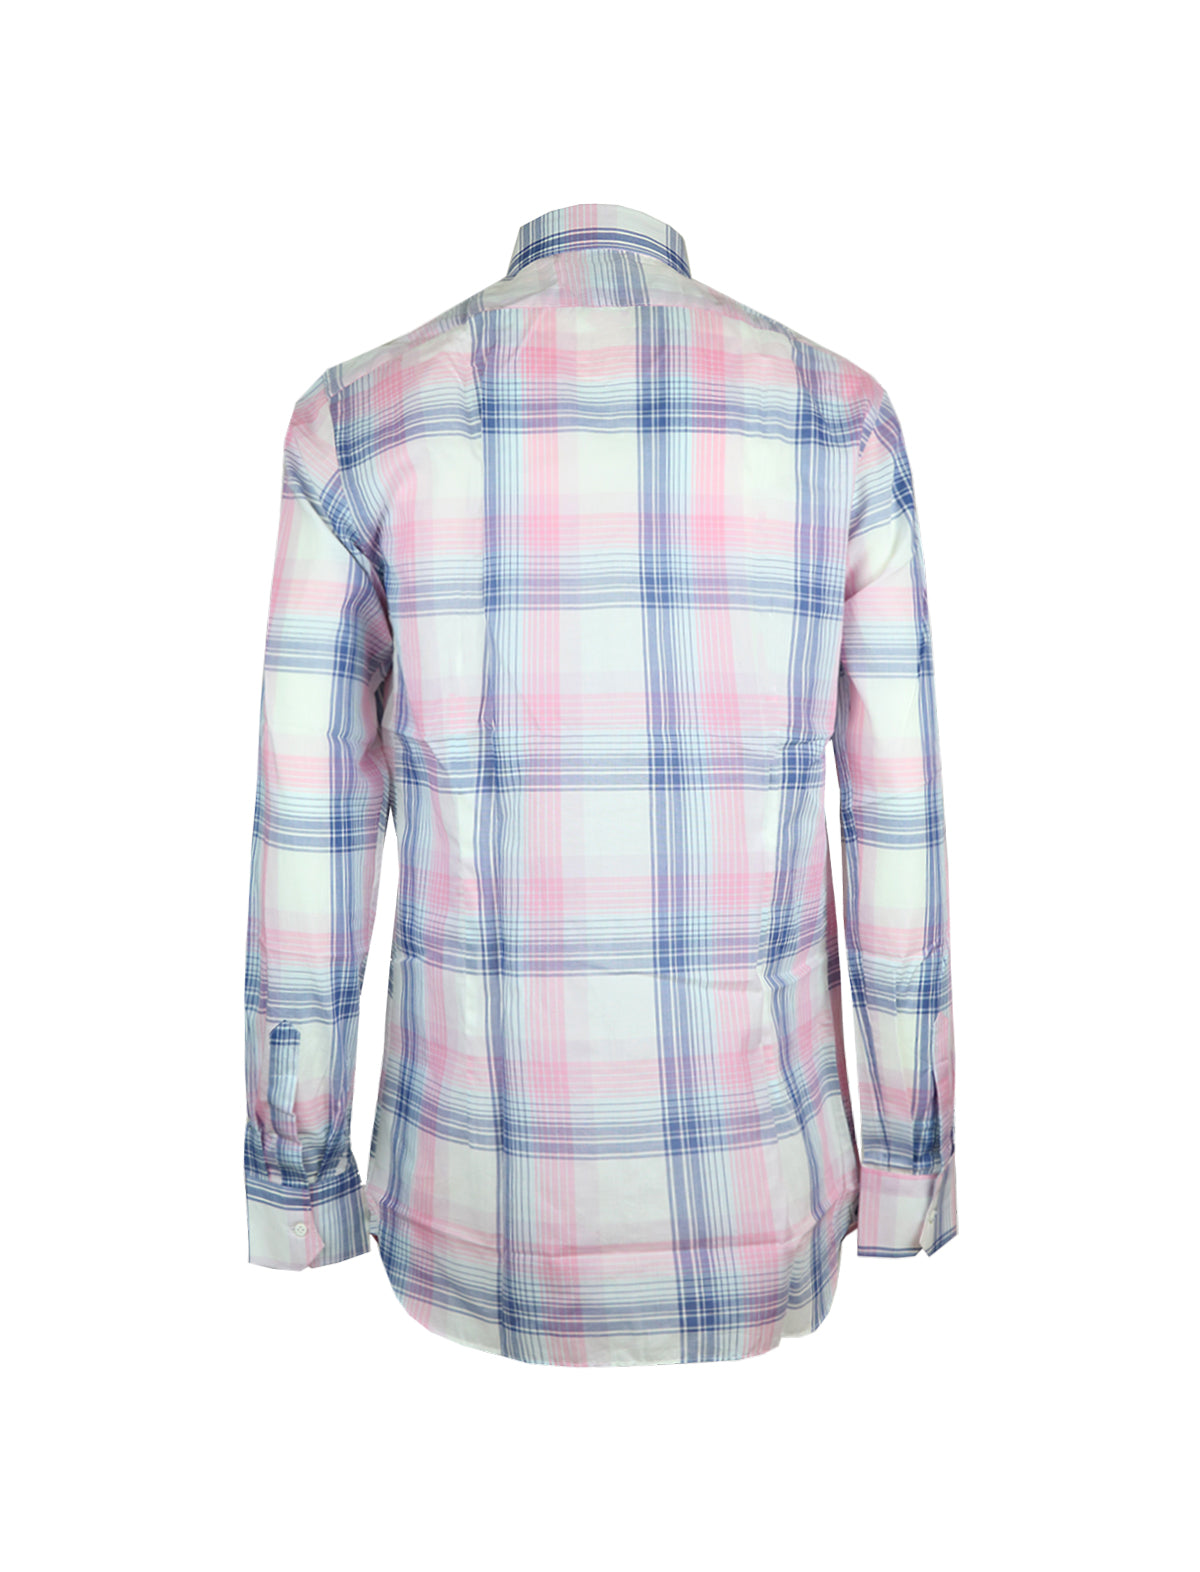 Gabriele Pasini Cotton Plaid Shirt in Blue/Pink